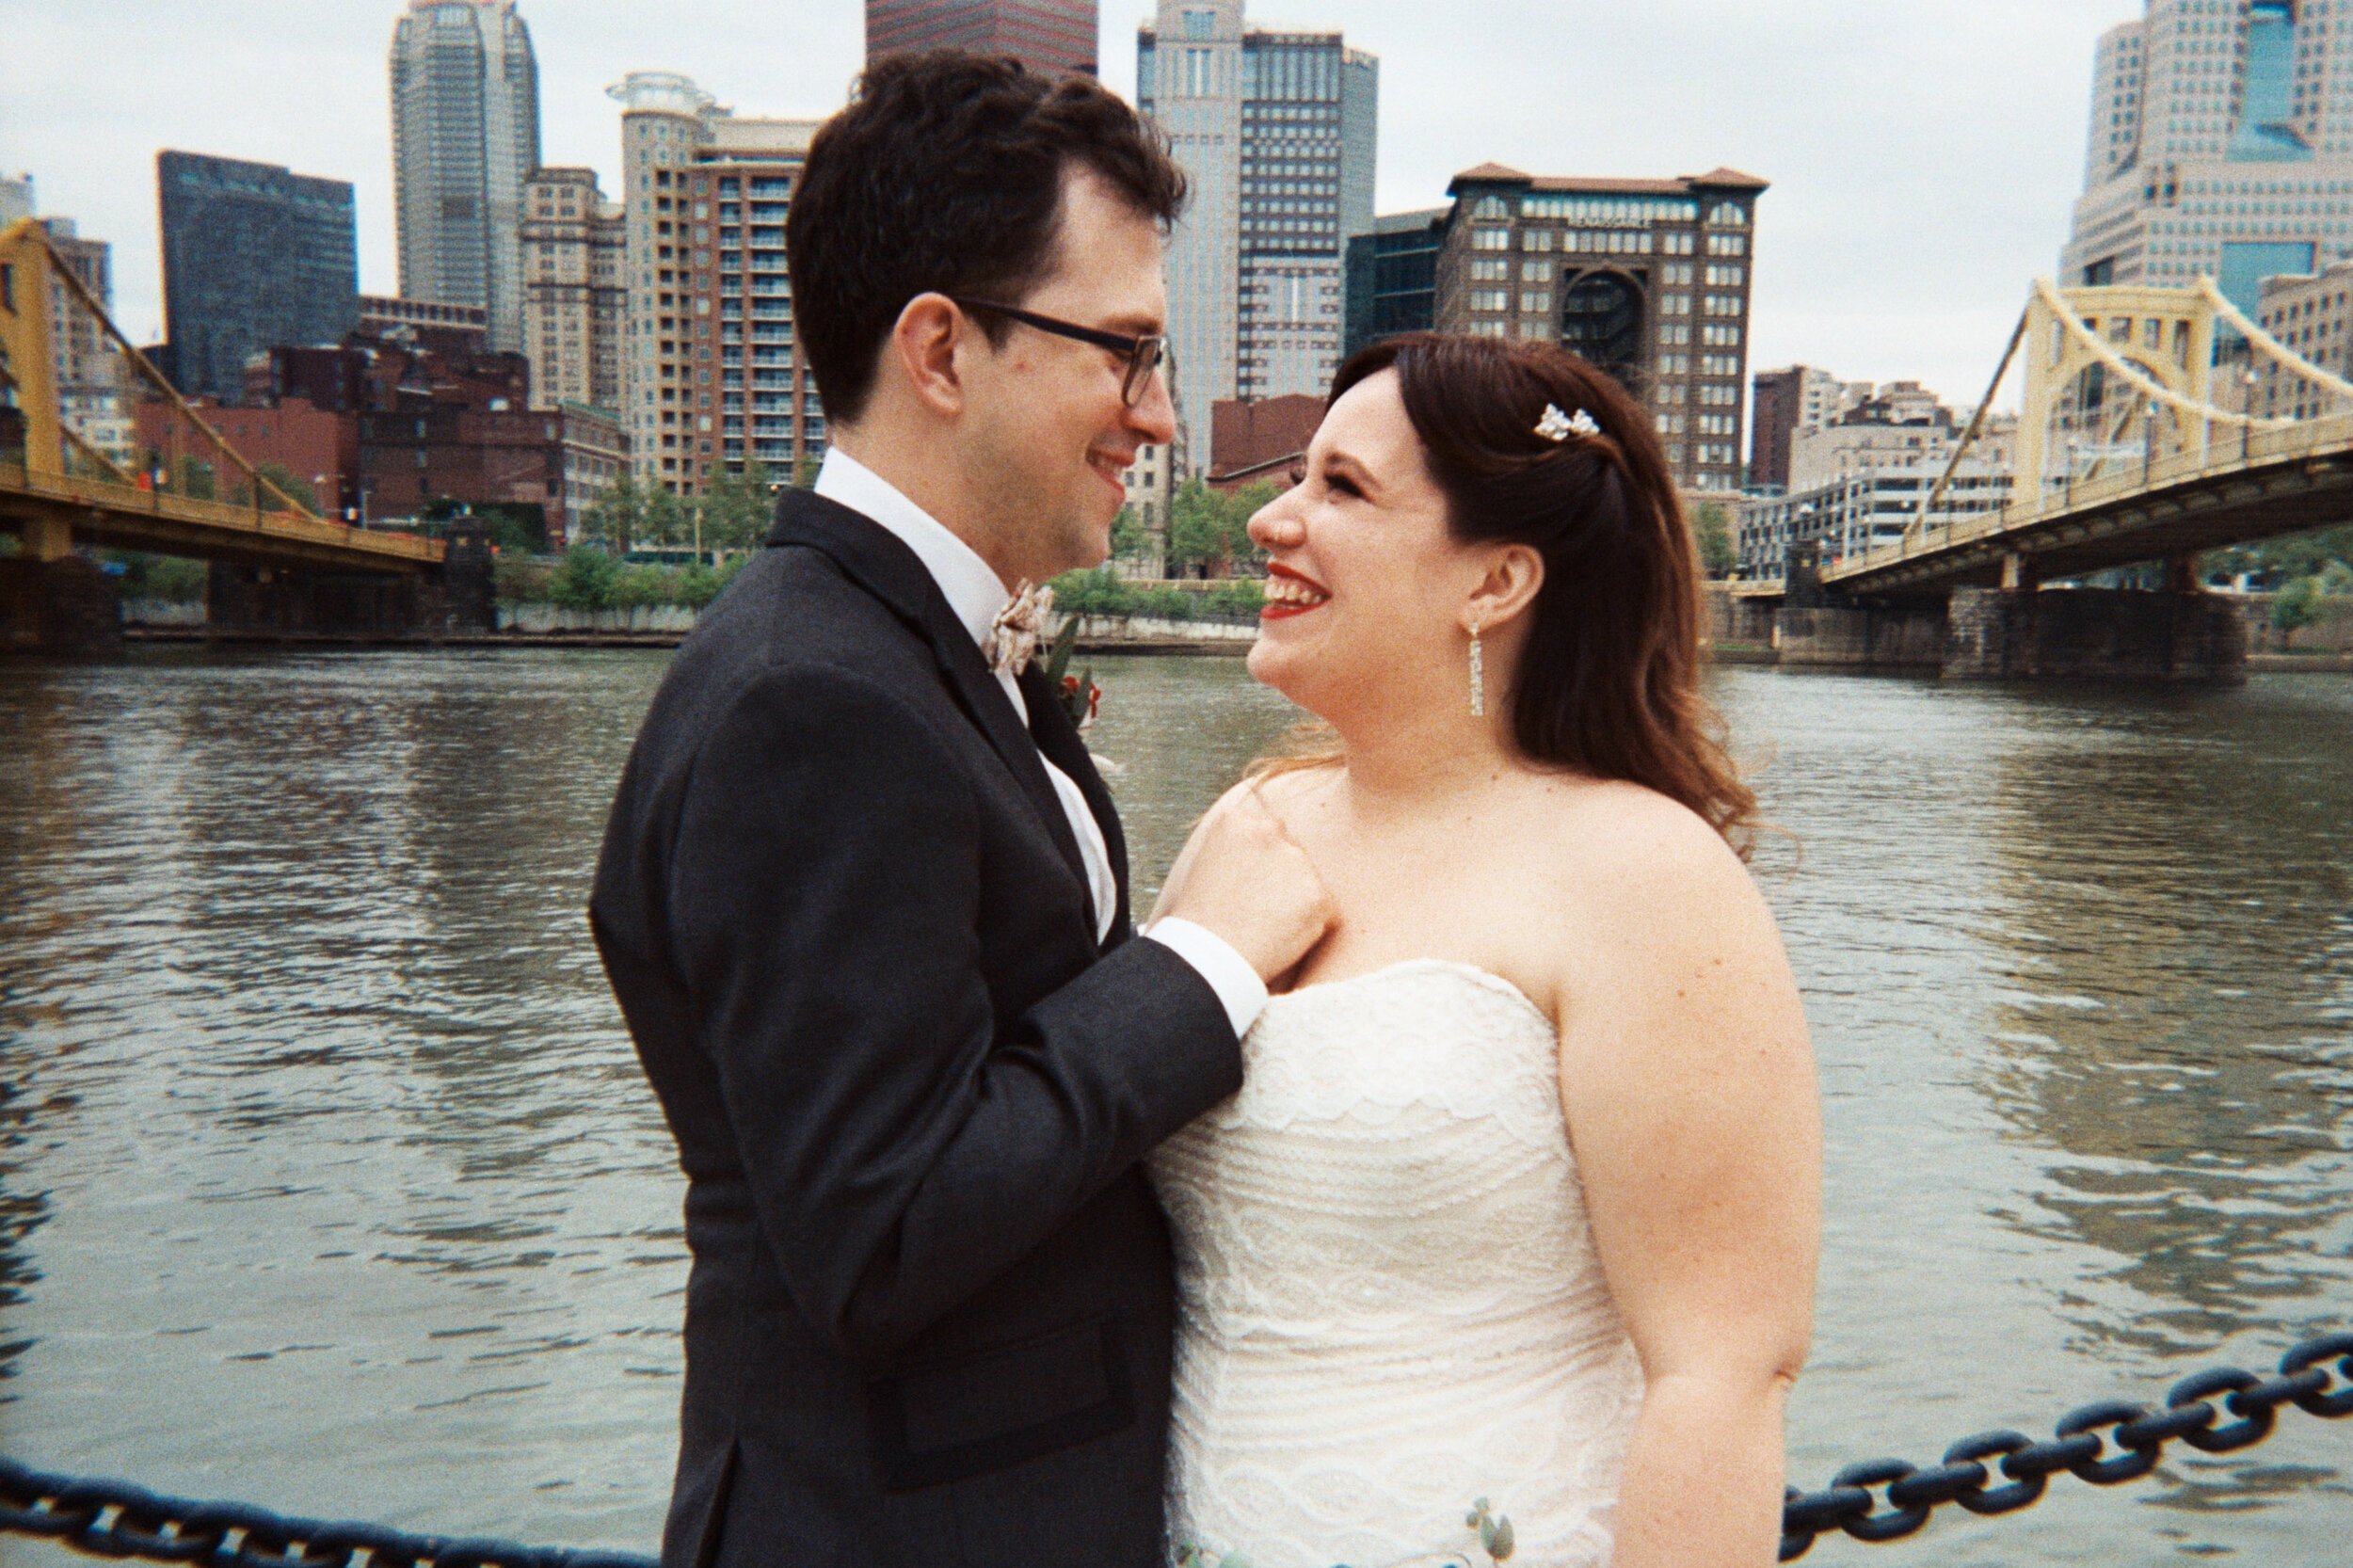 Pittsburgh NYC Film Wedding Photographer - Rat Lab - Lawrenceville - Stephanie Dave128.jpg